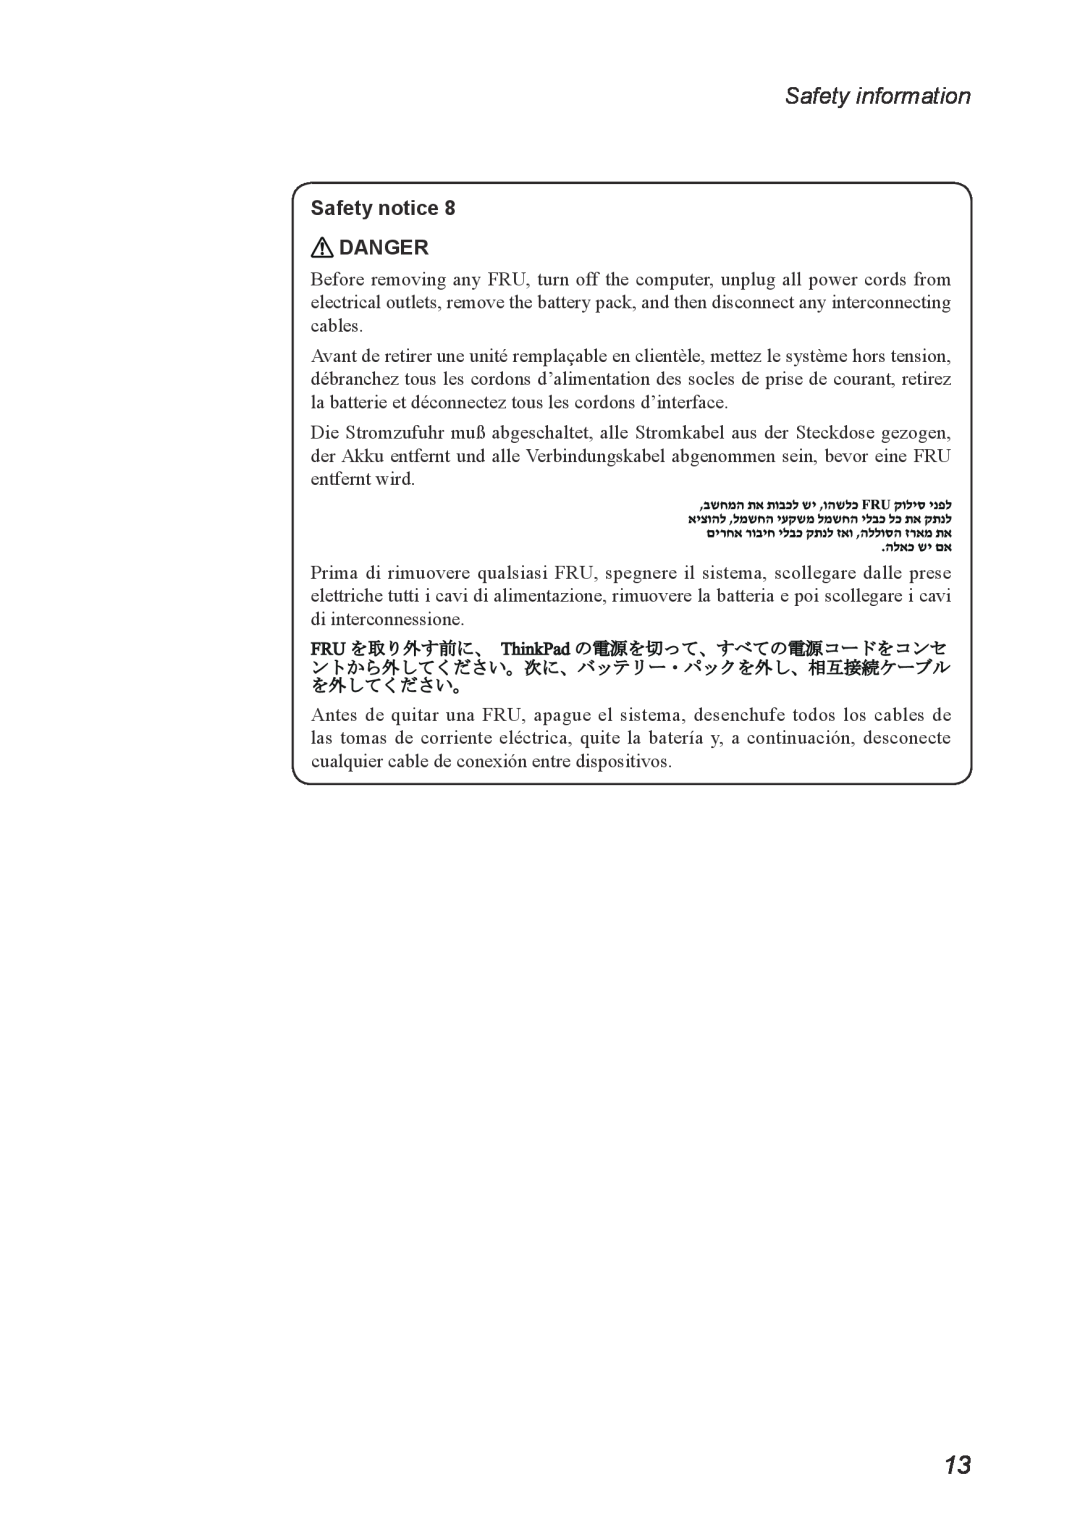 Lenovo Y560 manual Safety information, Safety notice DANGER 